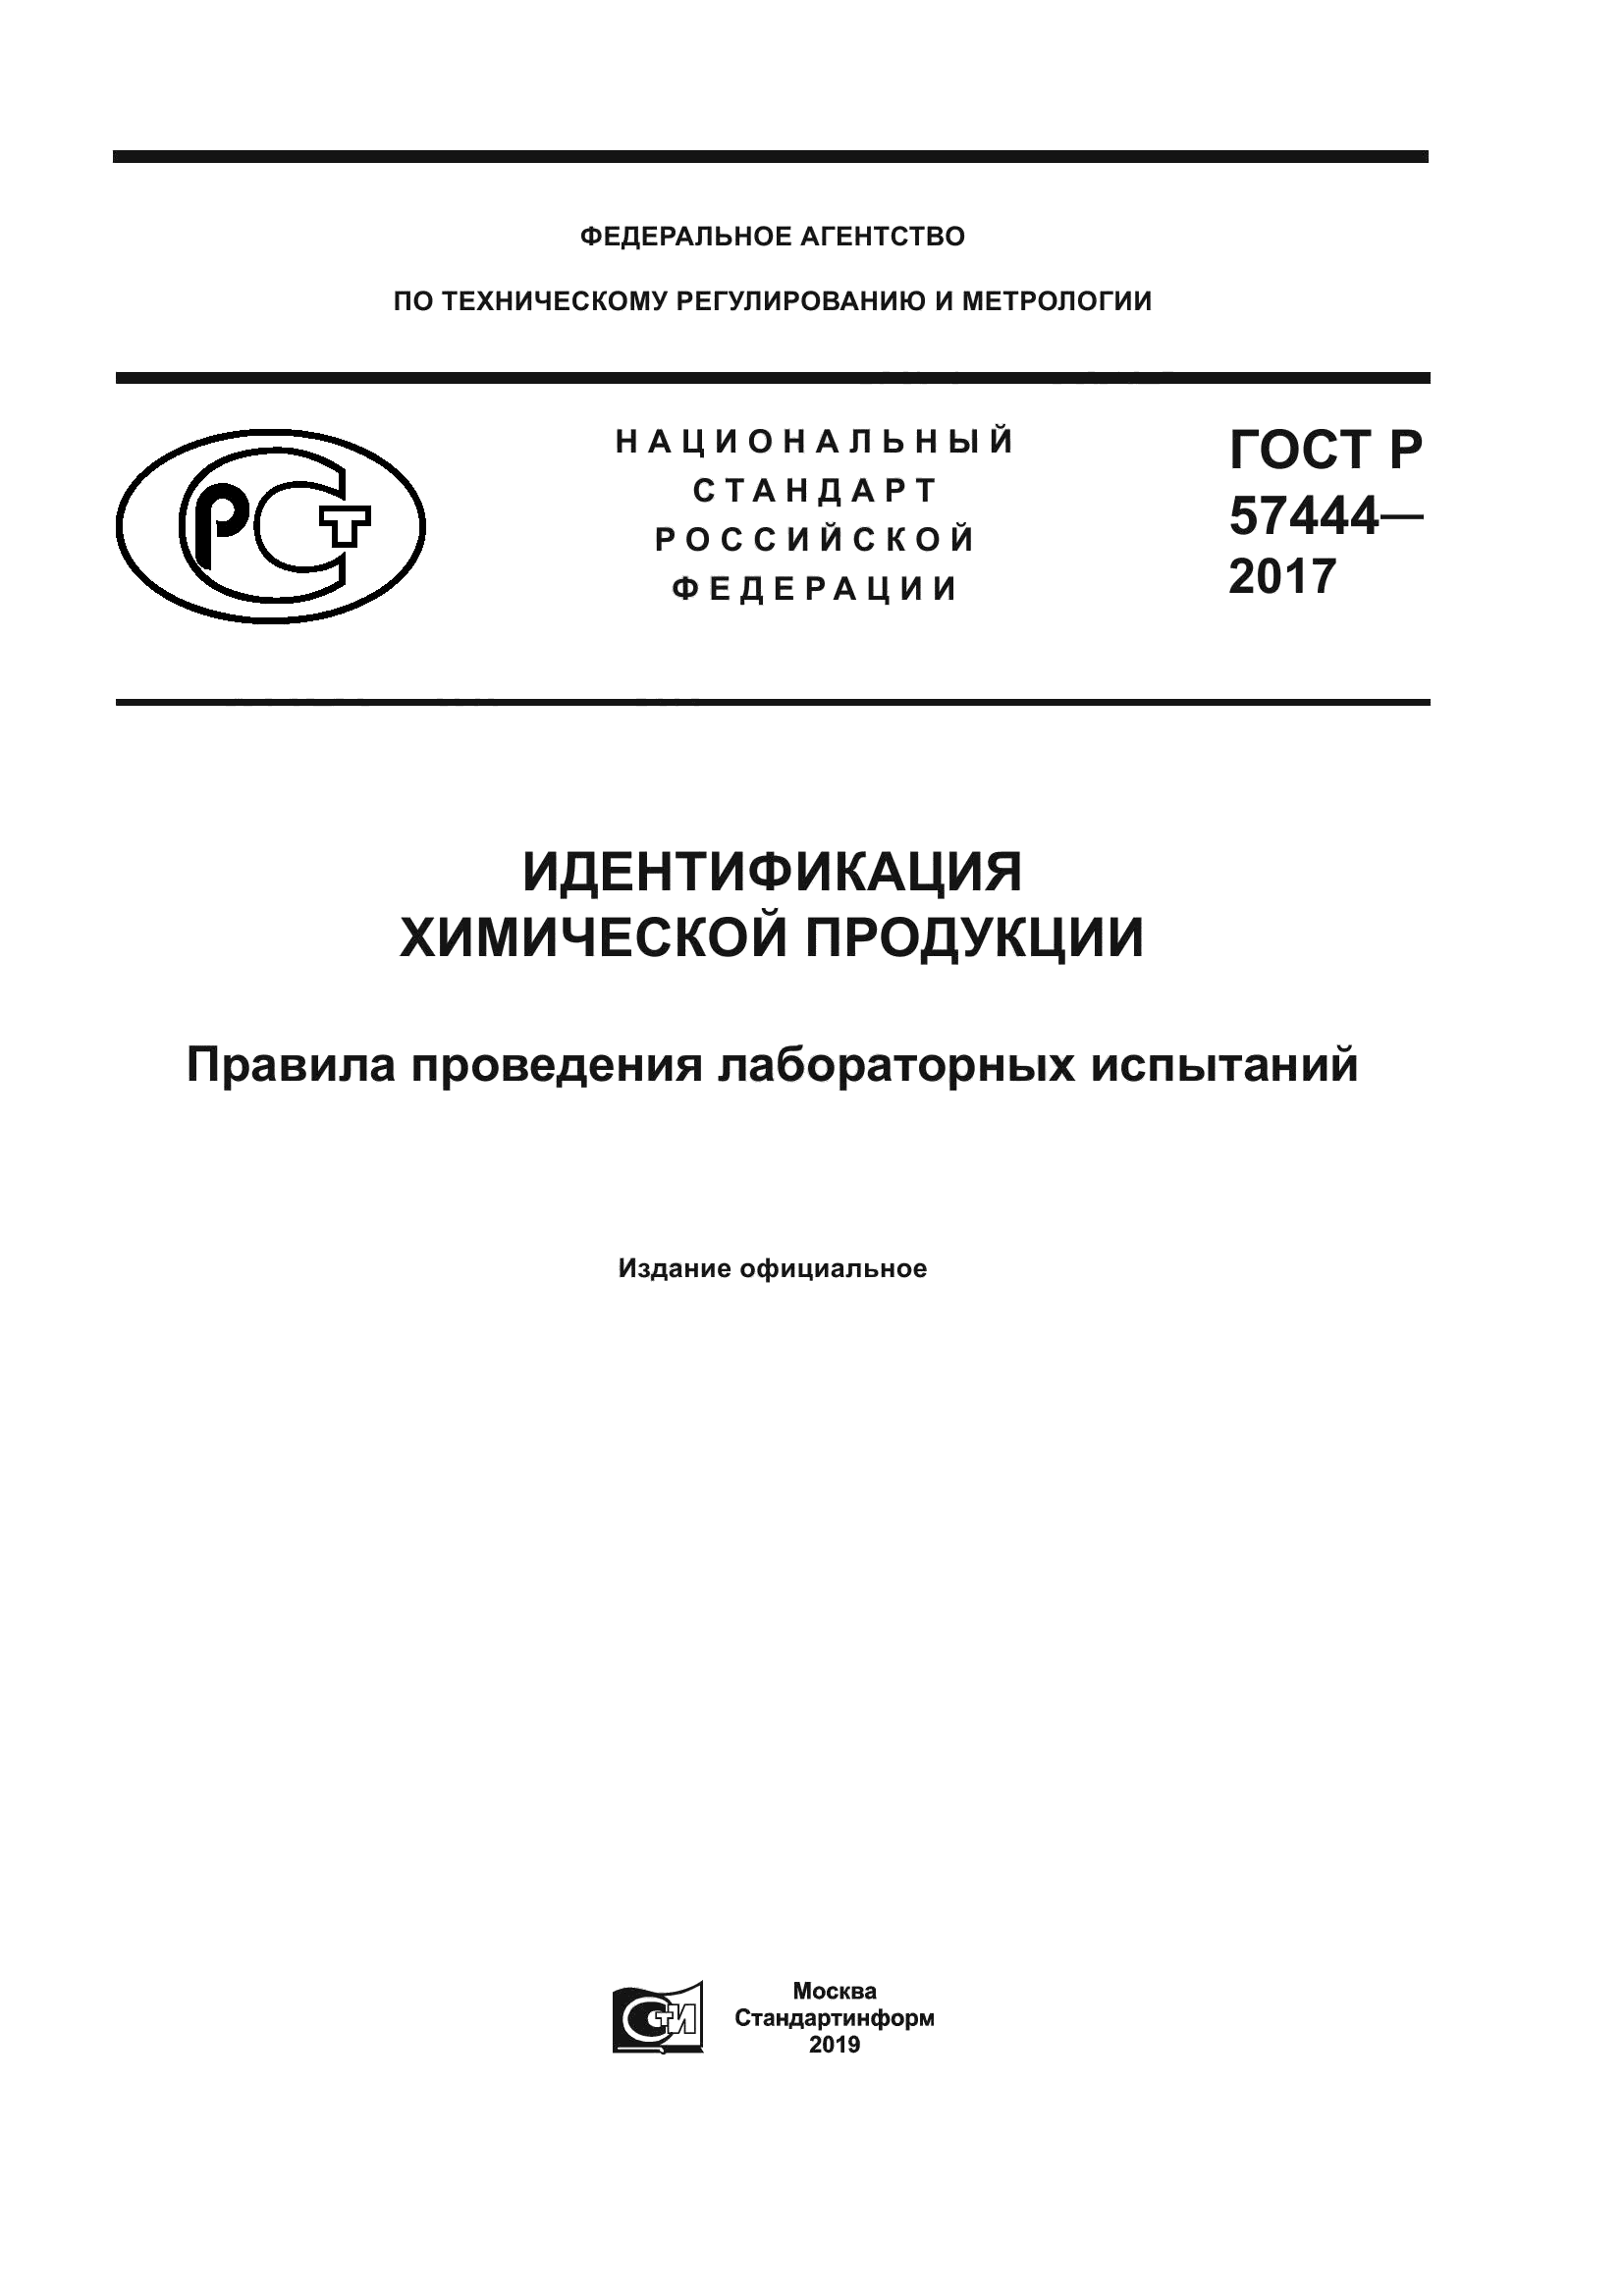 ГОСТ Р 57444-2017